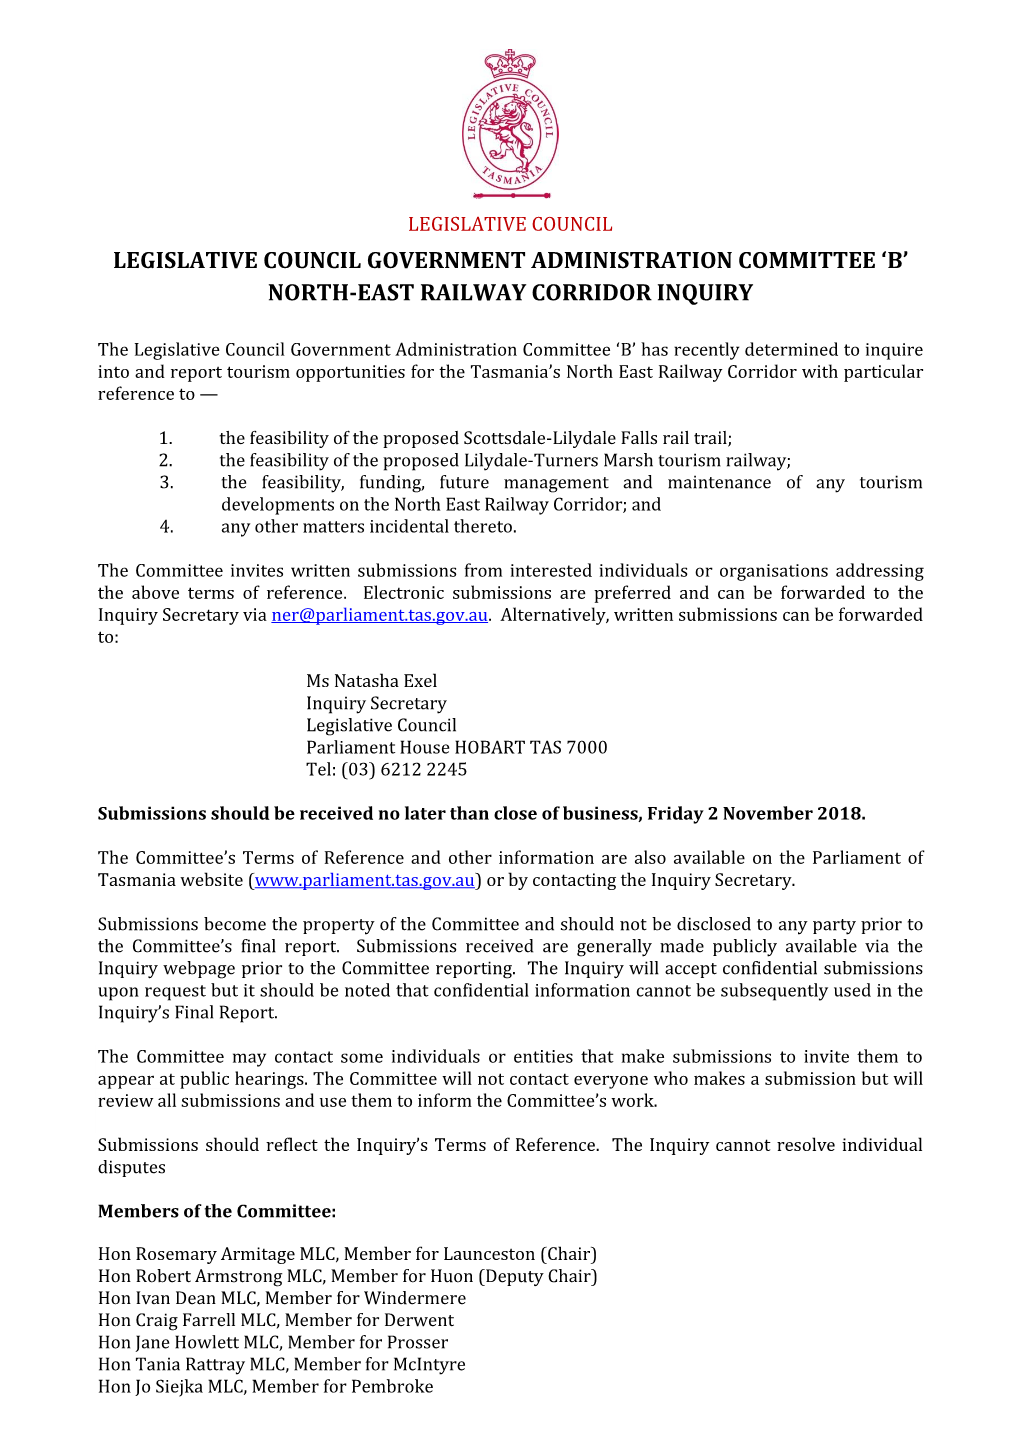 Legislative Council Government Administration Committee ‘B’ North-East Railway Corridor Inquiry